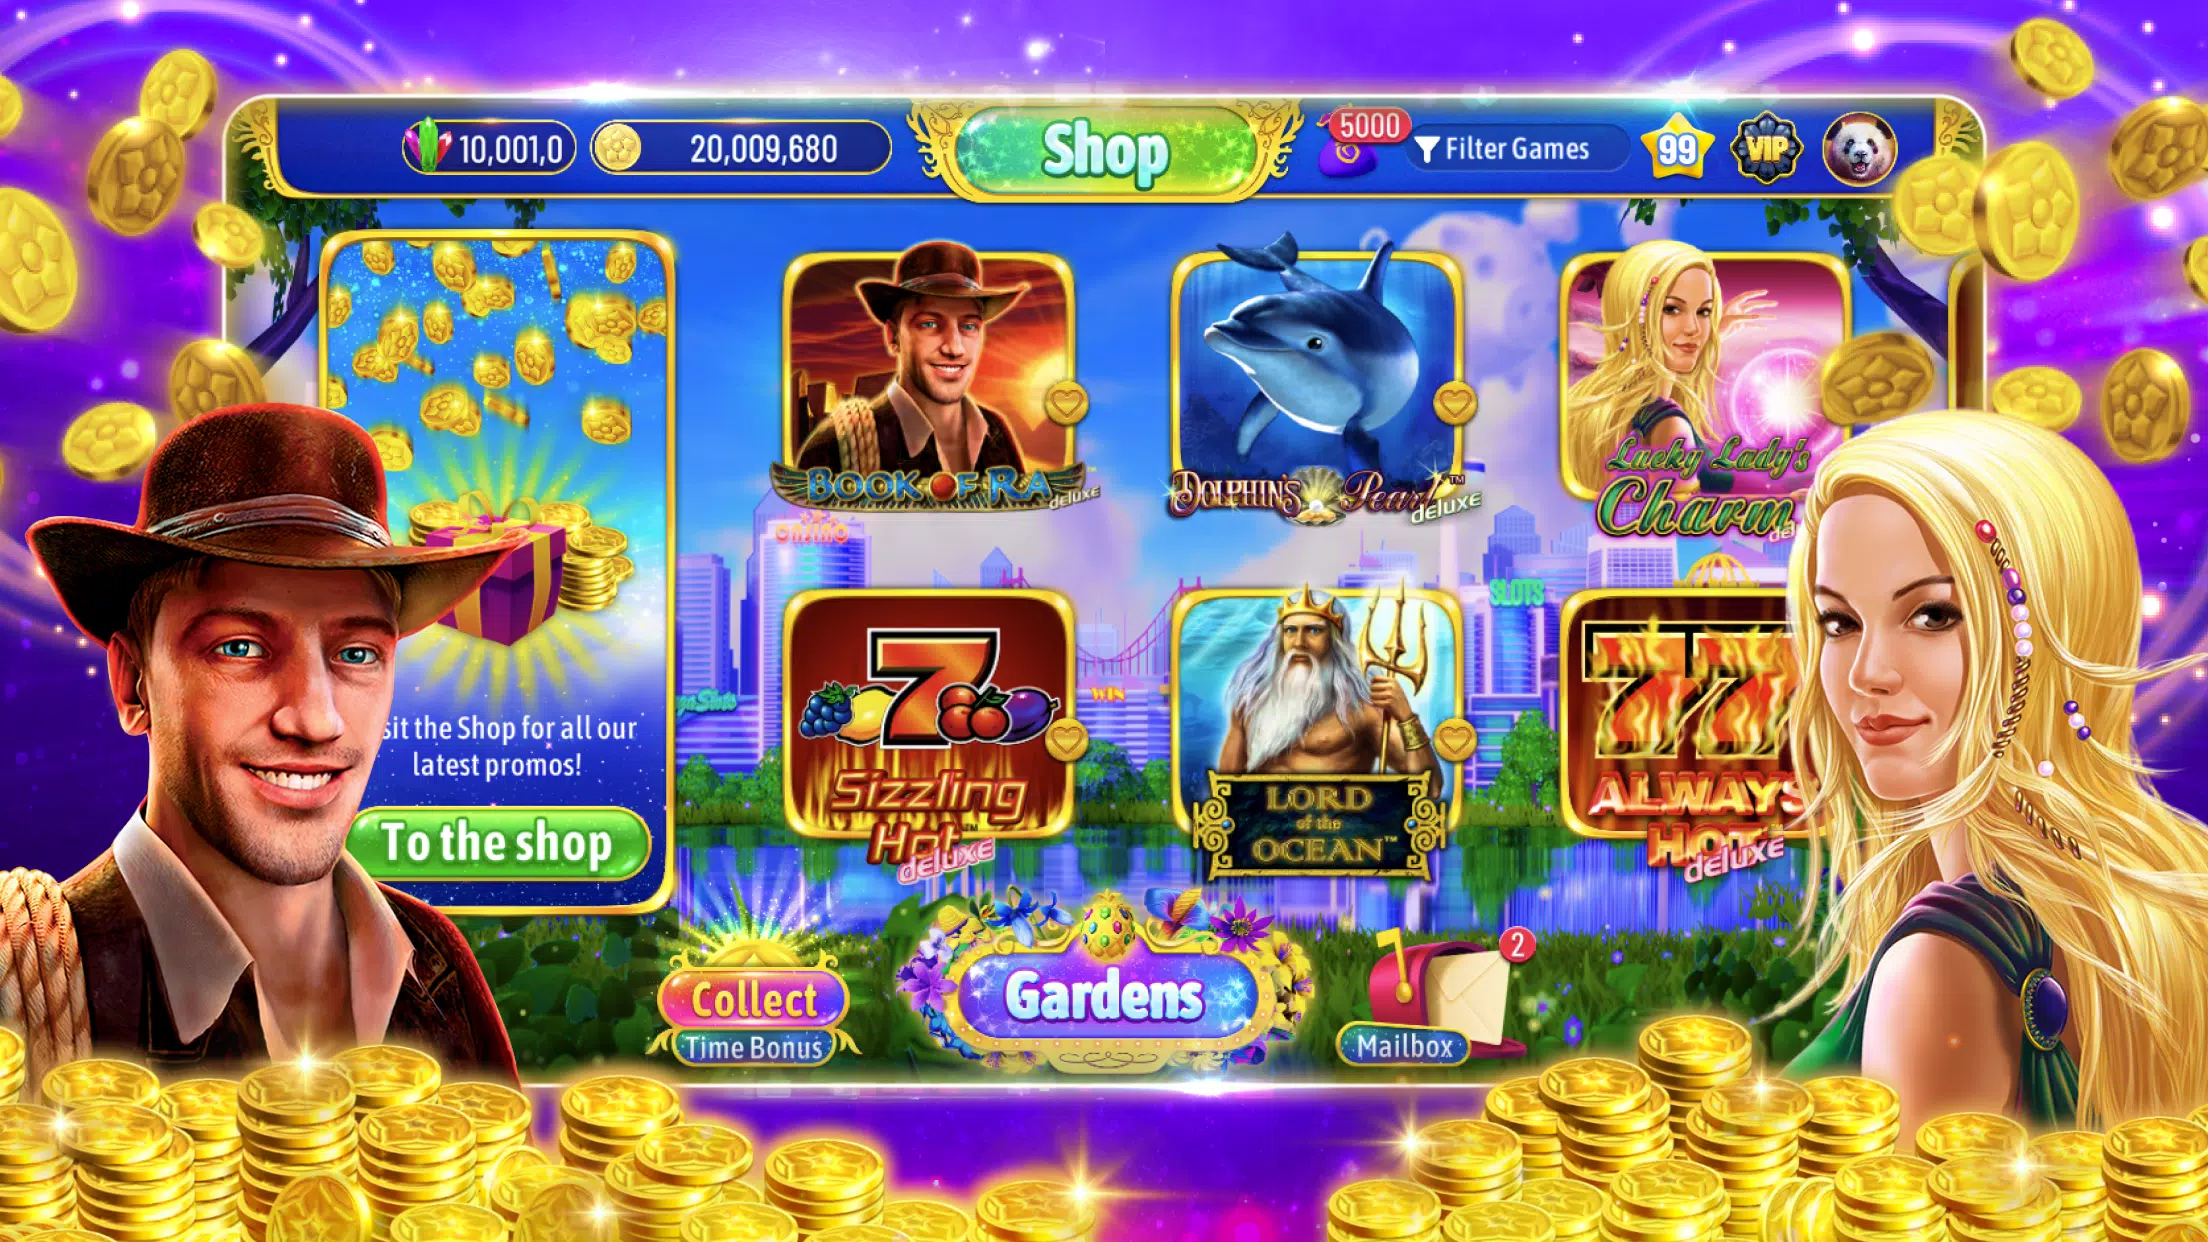 GameTwist Online Casino Slots  Online casino slots, Casino slots